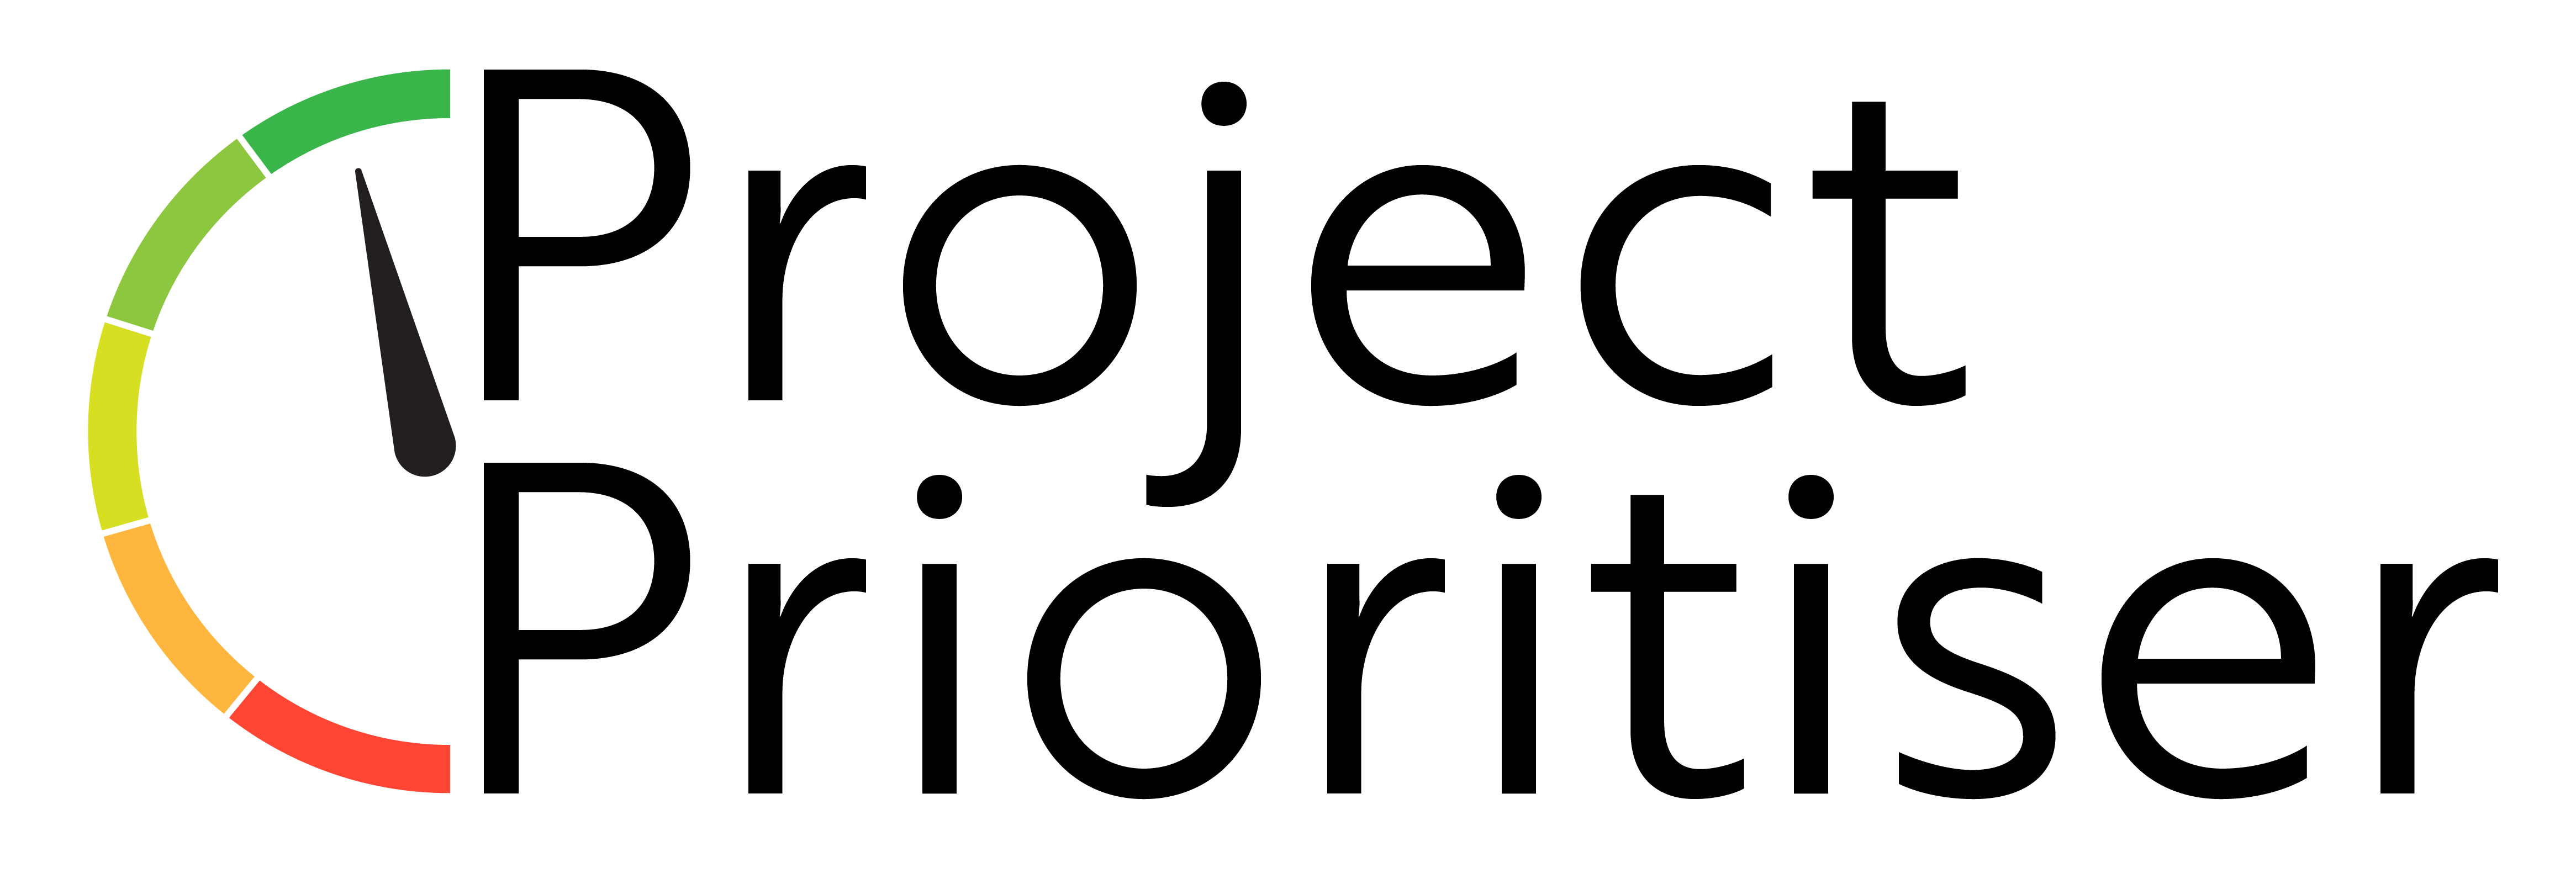 Project Prioritiser Logo